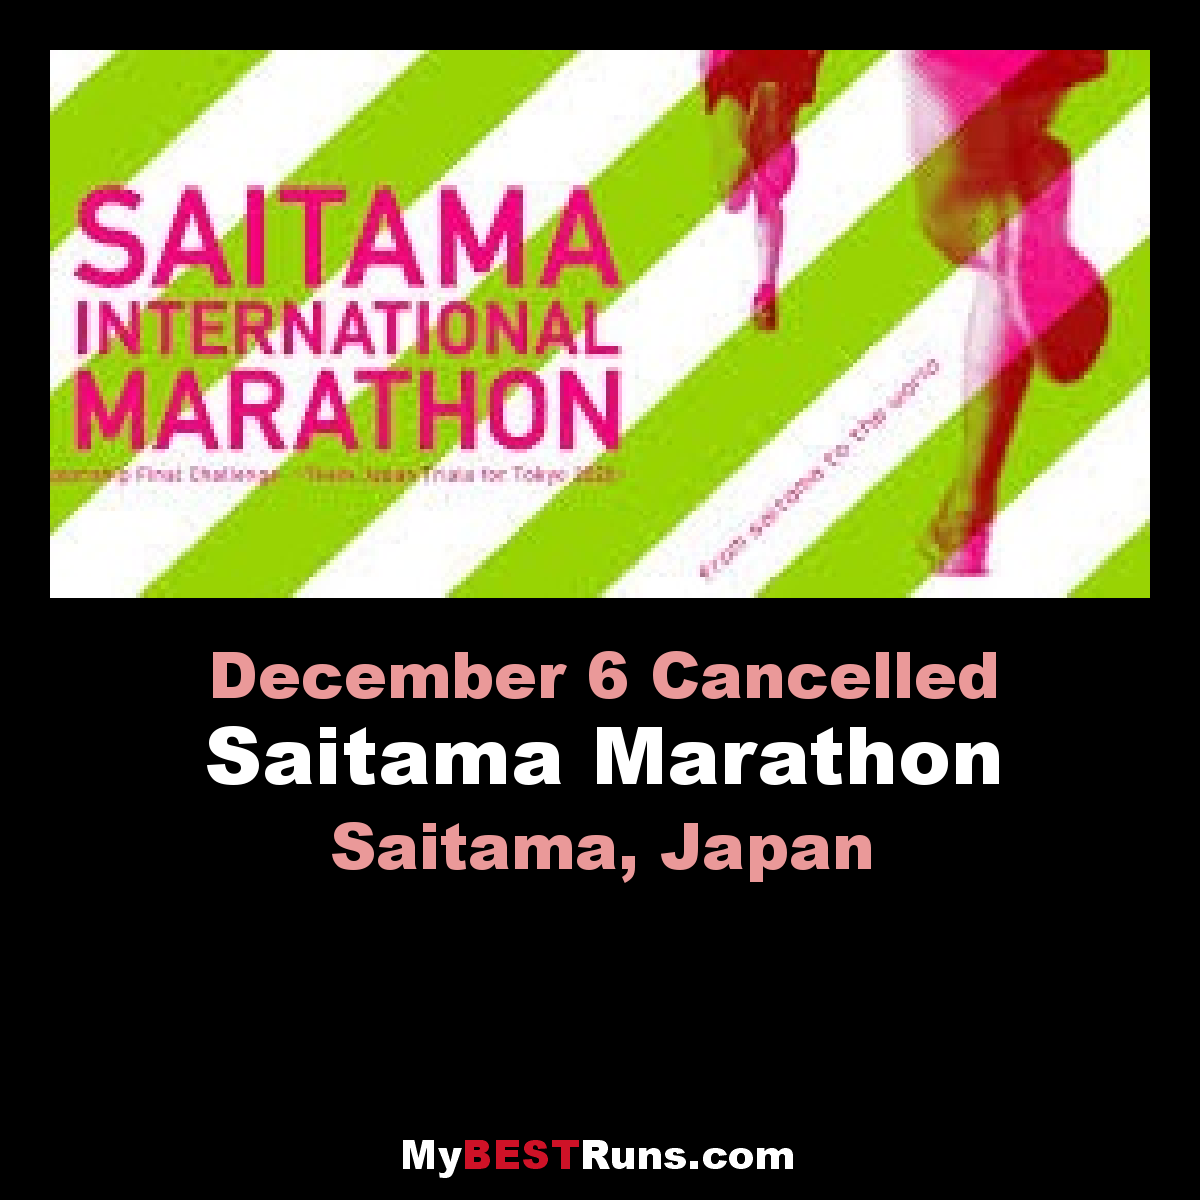 Saitama International Marathon